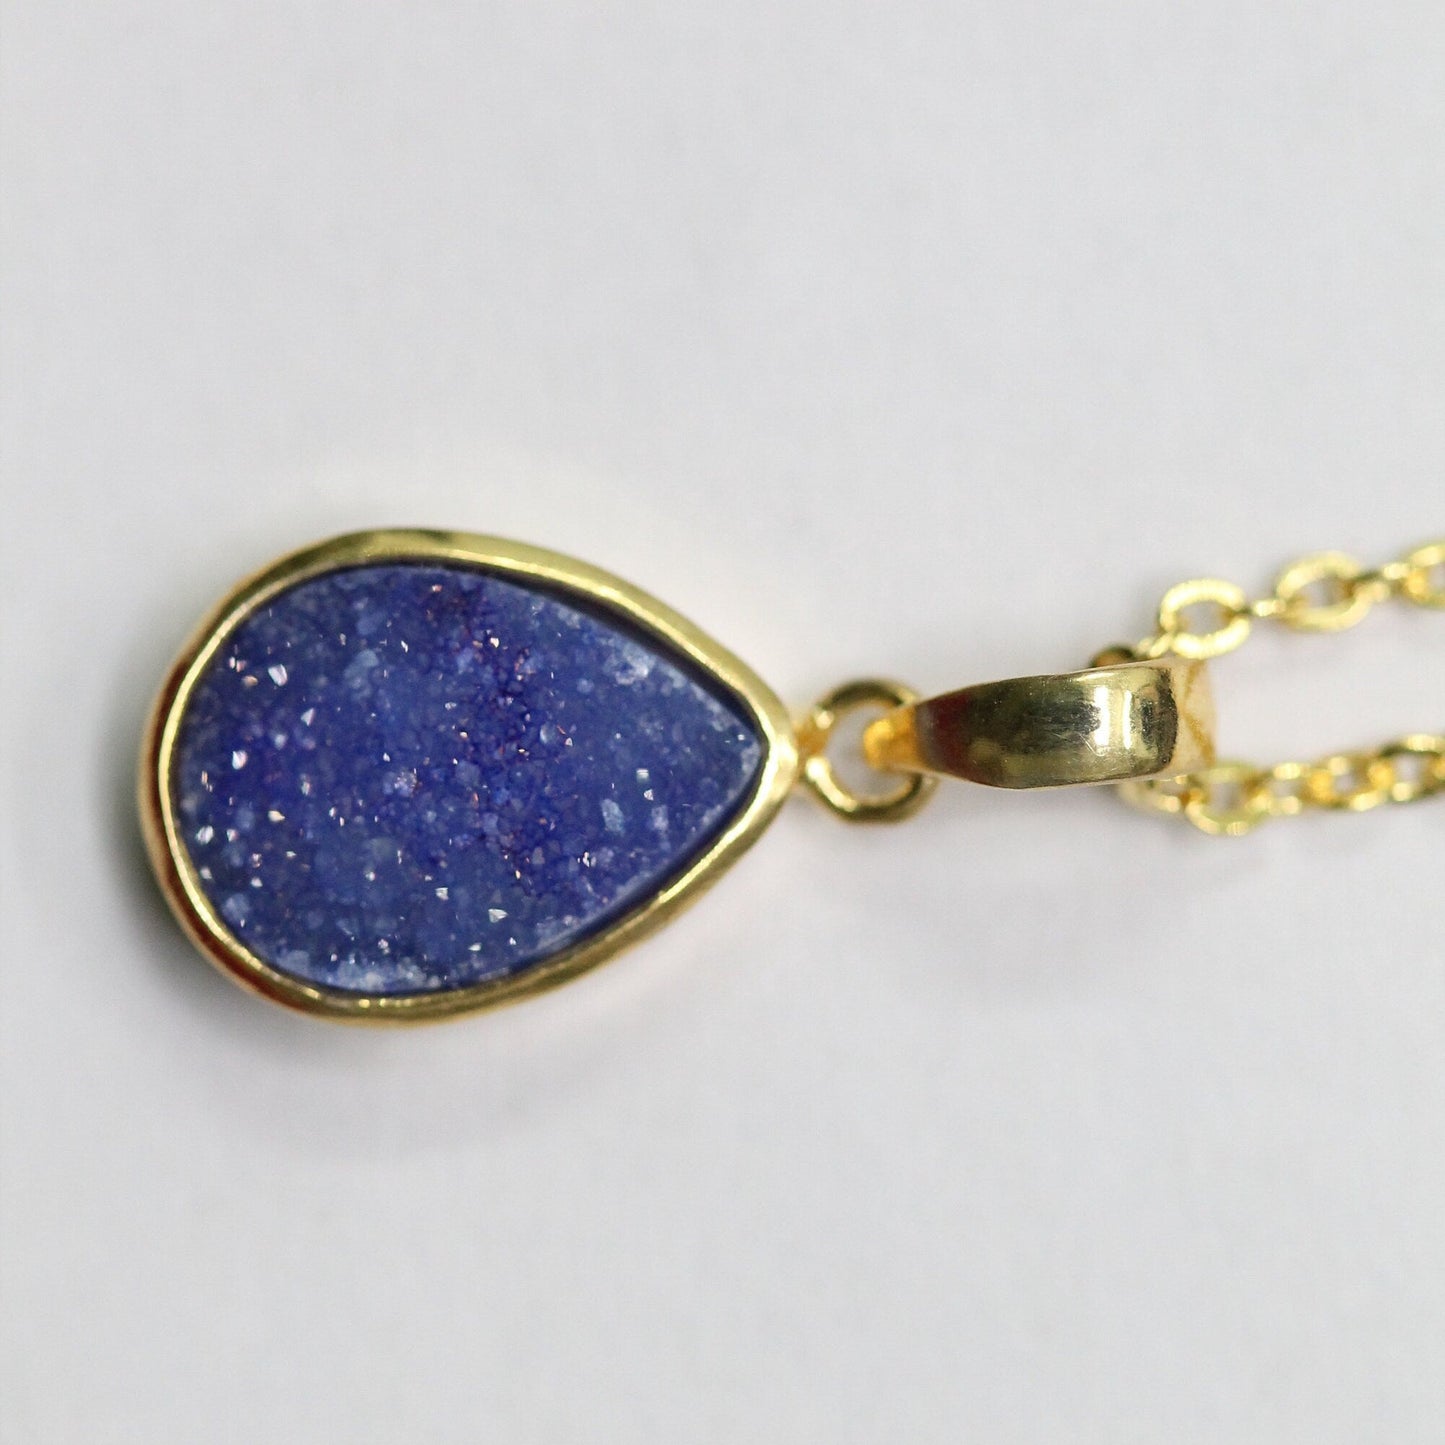 Natural Druzy Pendant, 10 * 14 mm, gold pendant, Druzy, Gemstone Pendant, Druzy Collet Pendant - Meena Design